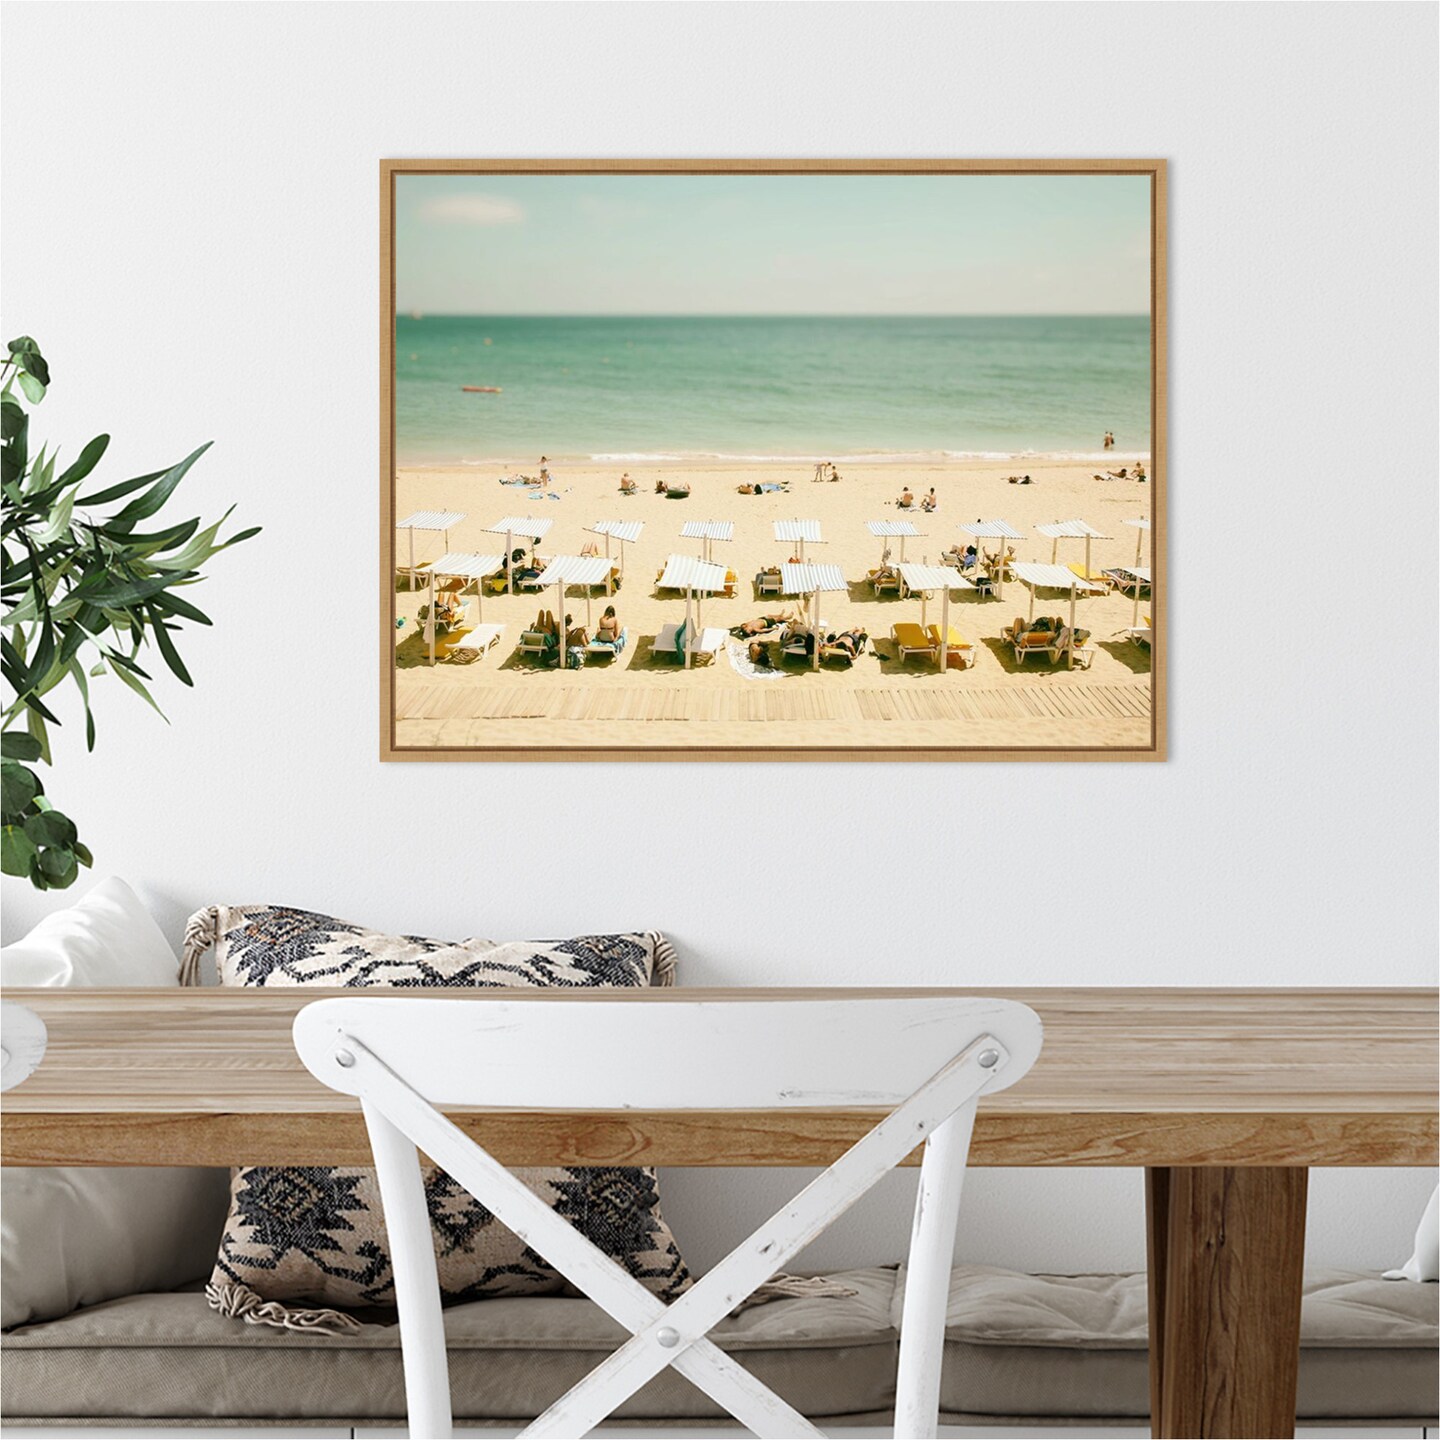 Seaside 3 (Beach) by Carina Okula 24-in. W x 18-in. H. Canvas Wall Art Print Framed in Natural